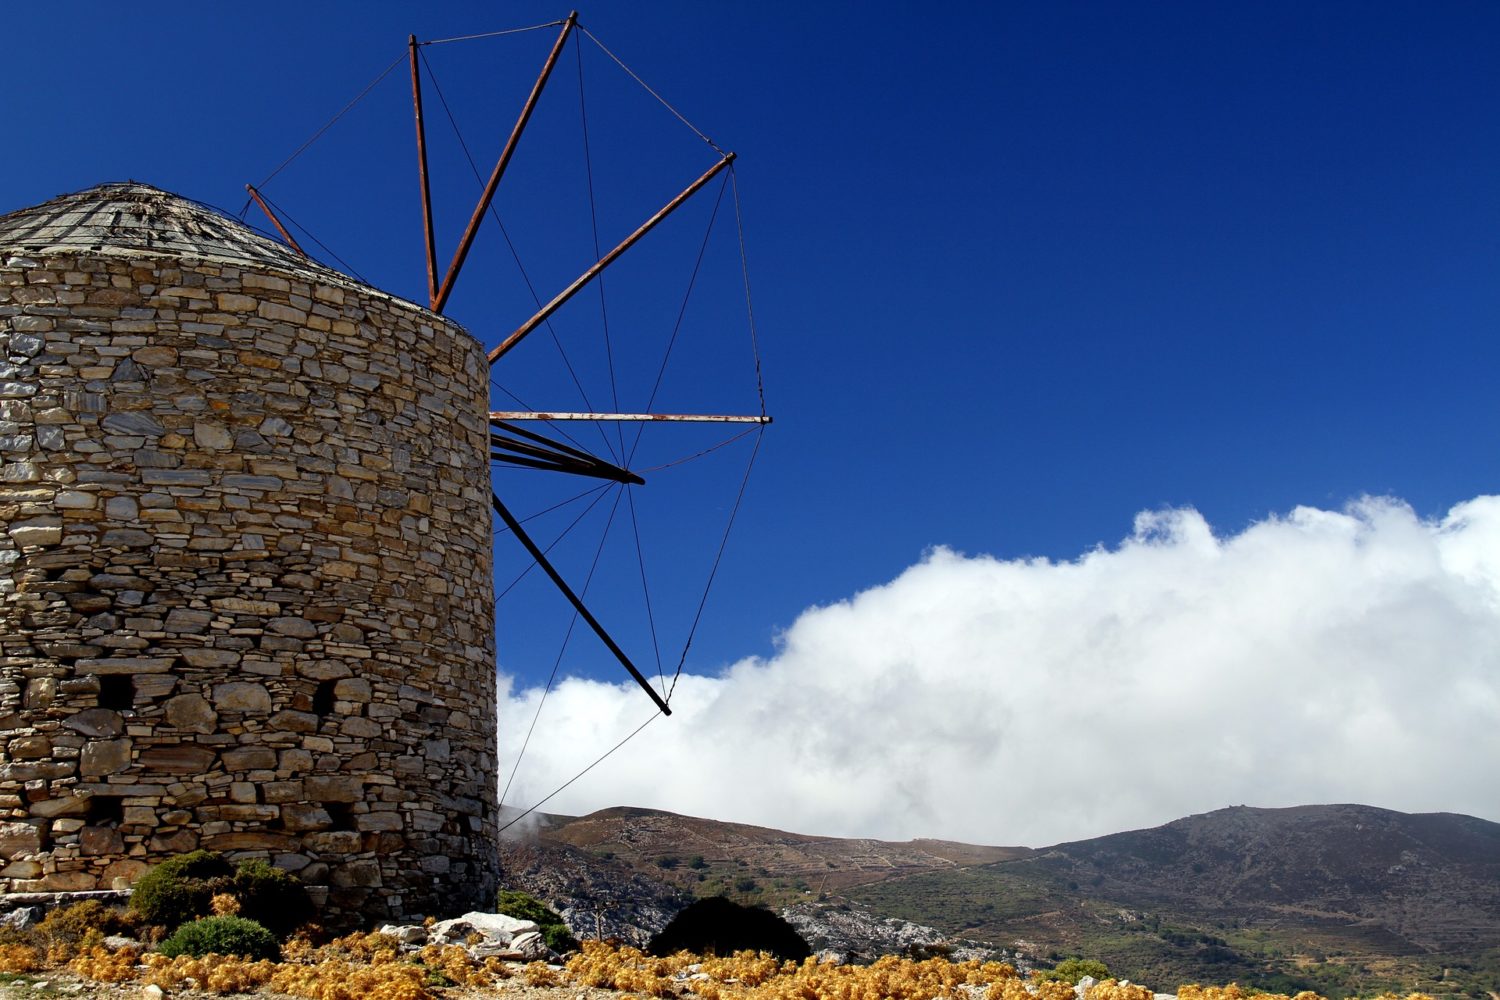 Old windmills still dot the hillsides in Naxos, Greece.